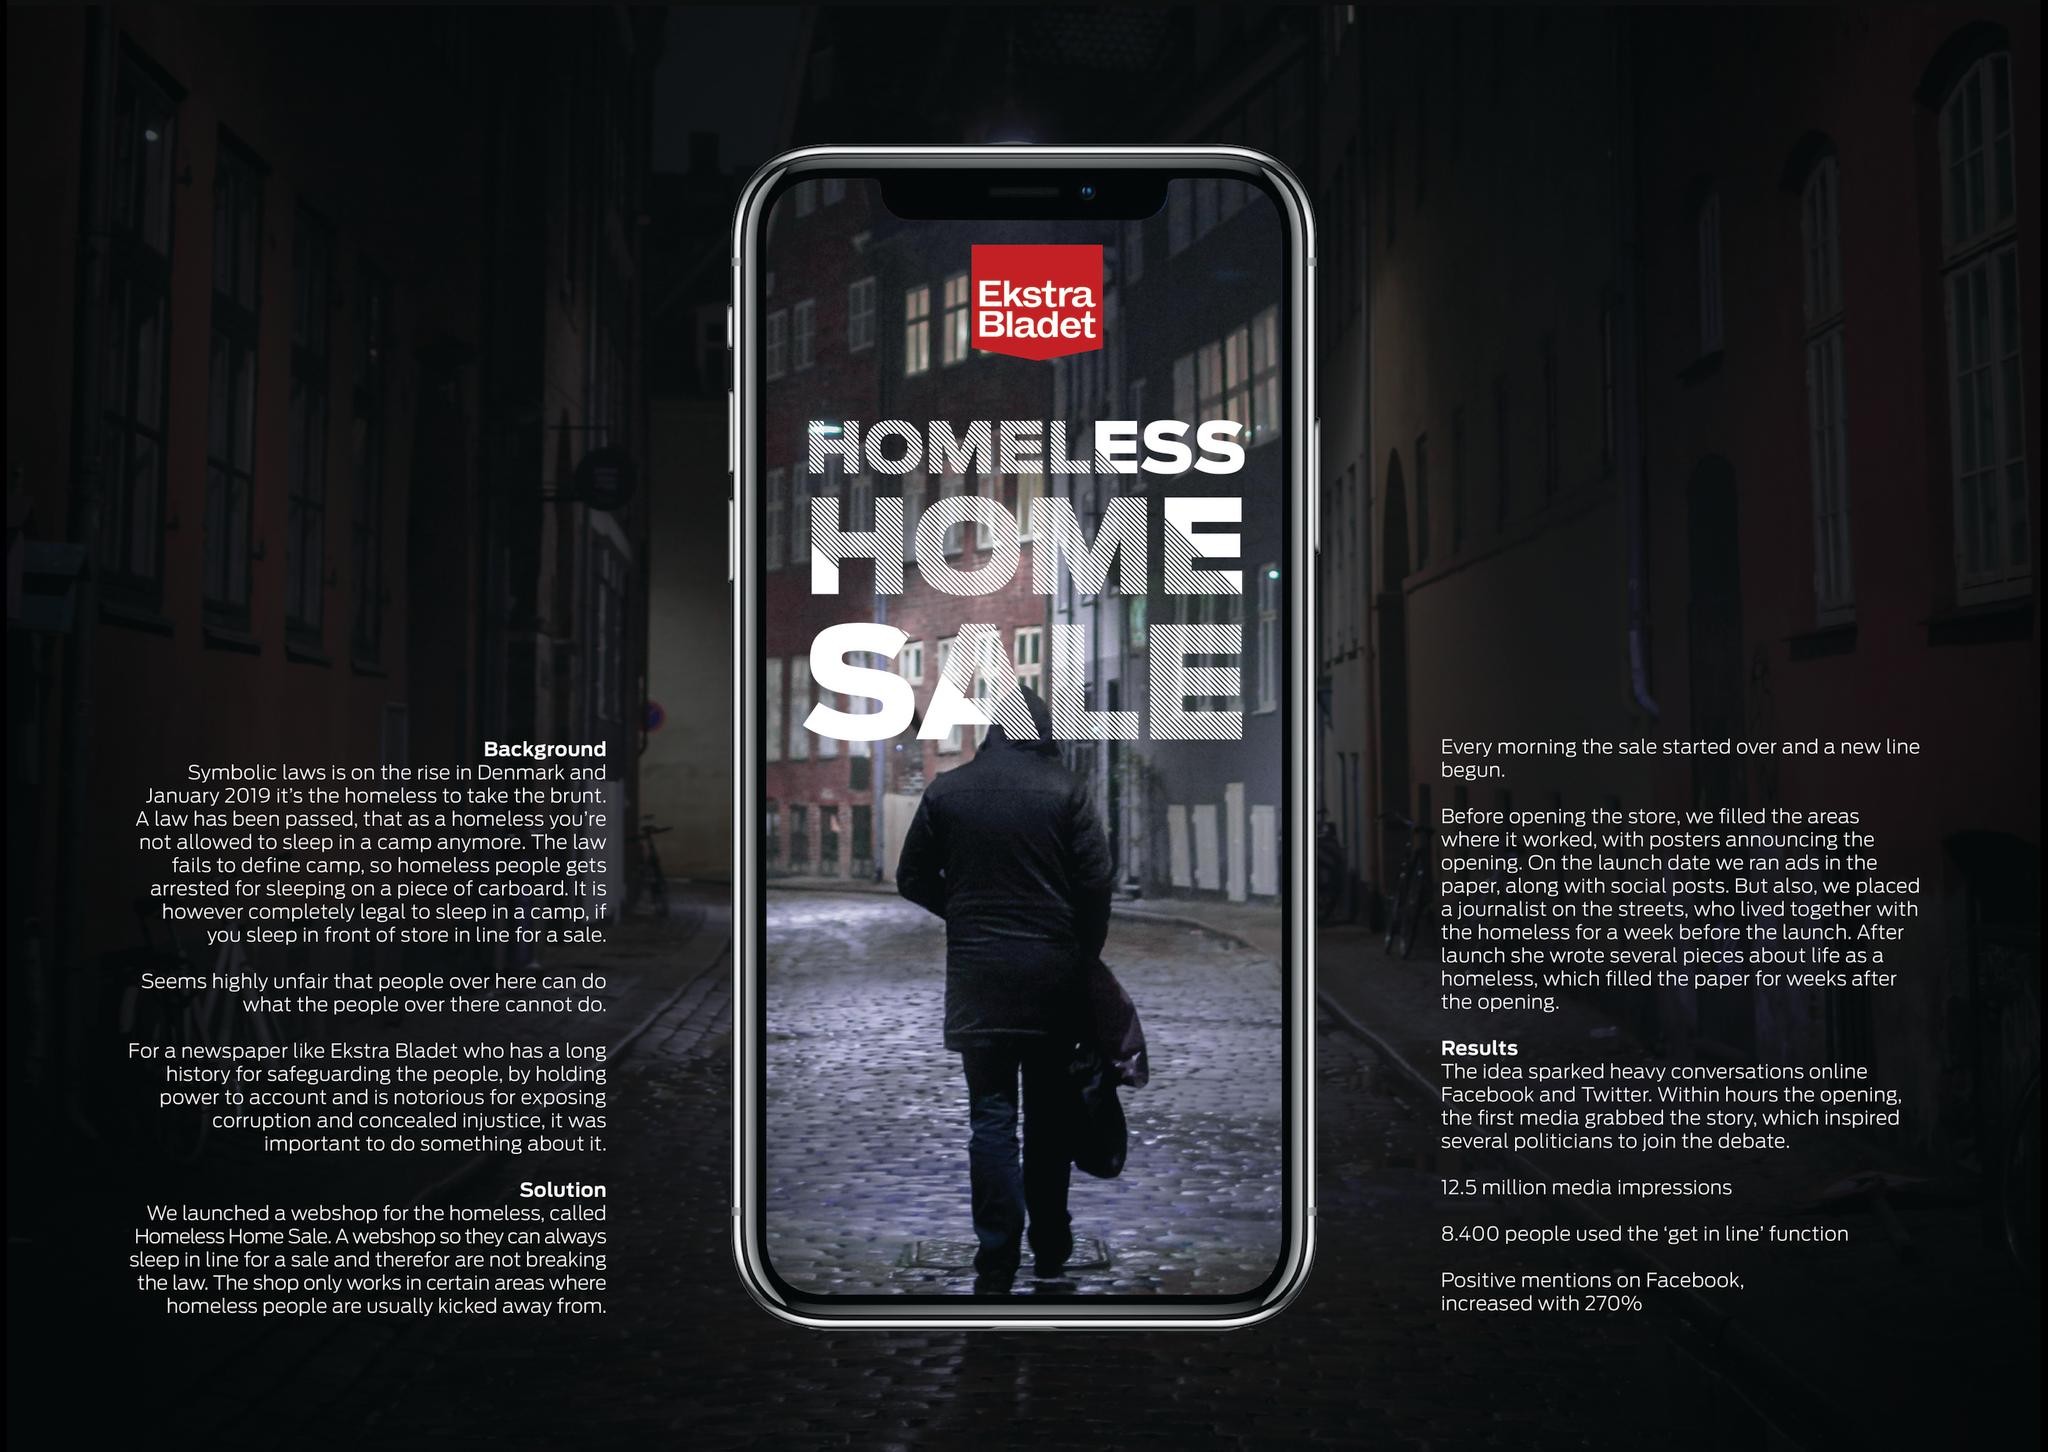 Homeless Home Sale